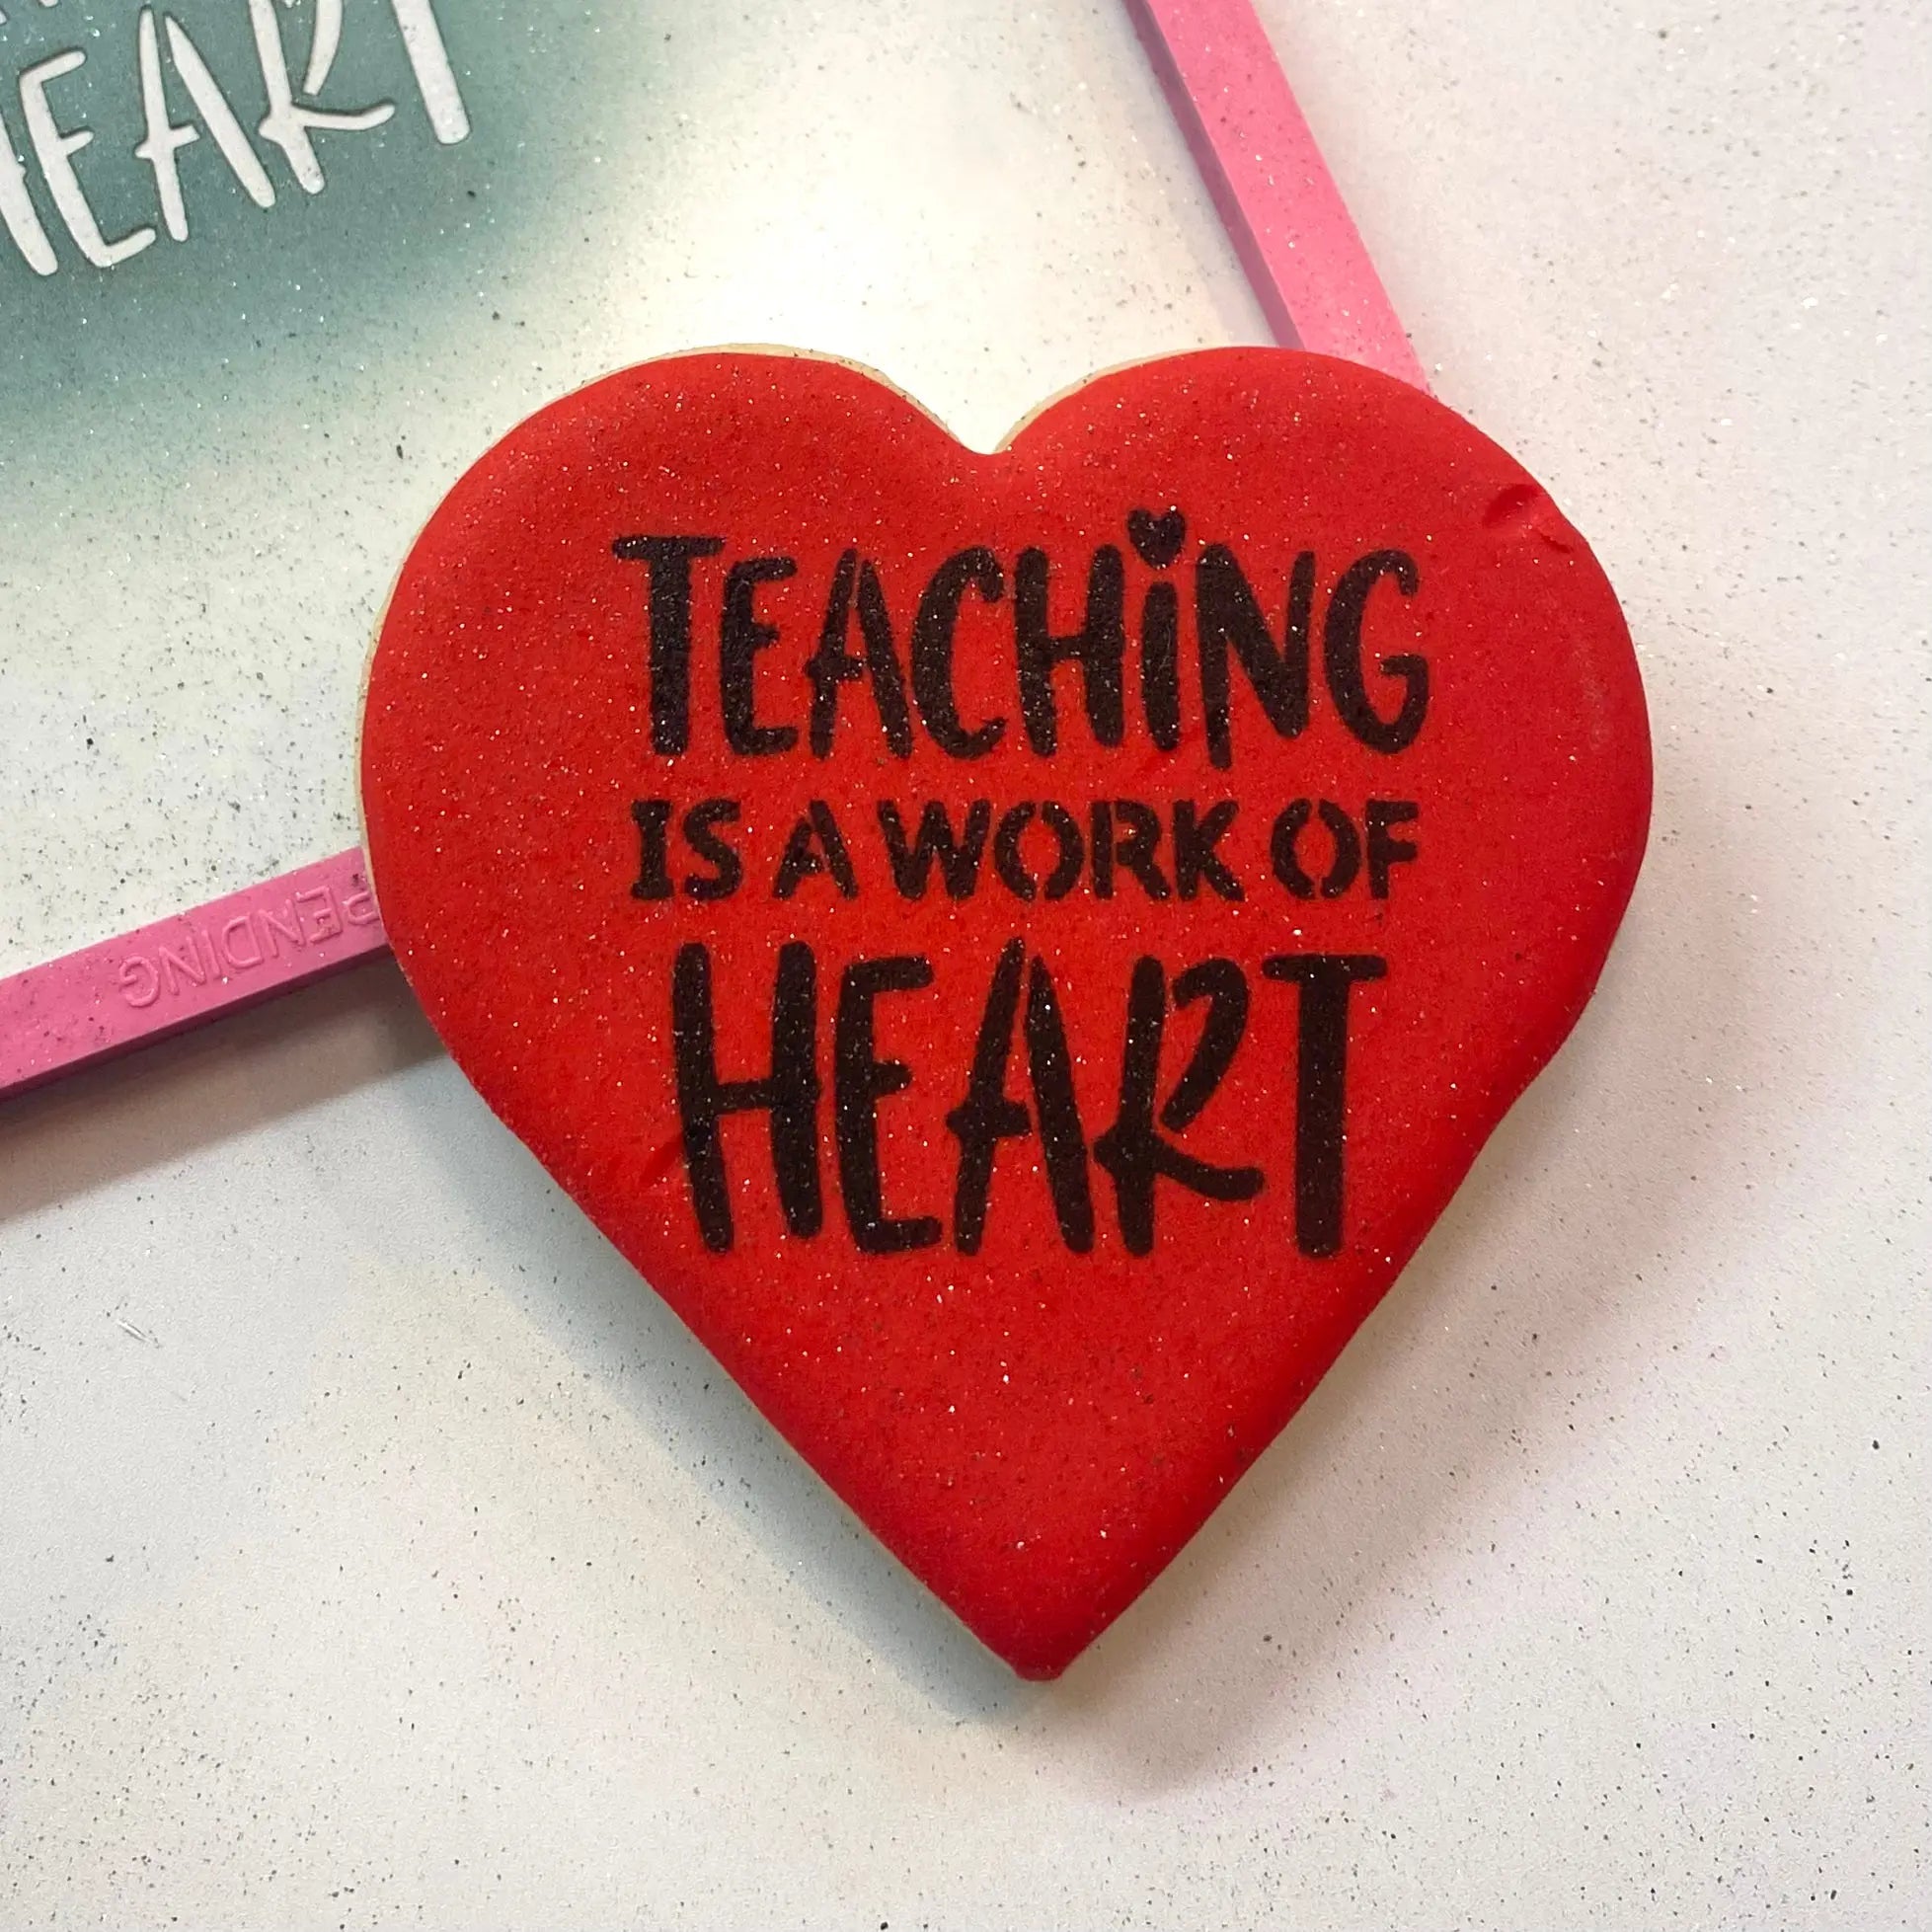 Teaching is a Work of Heart Cookie Stencil bakeartstencil